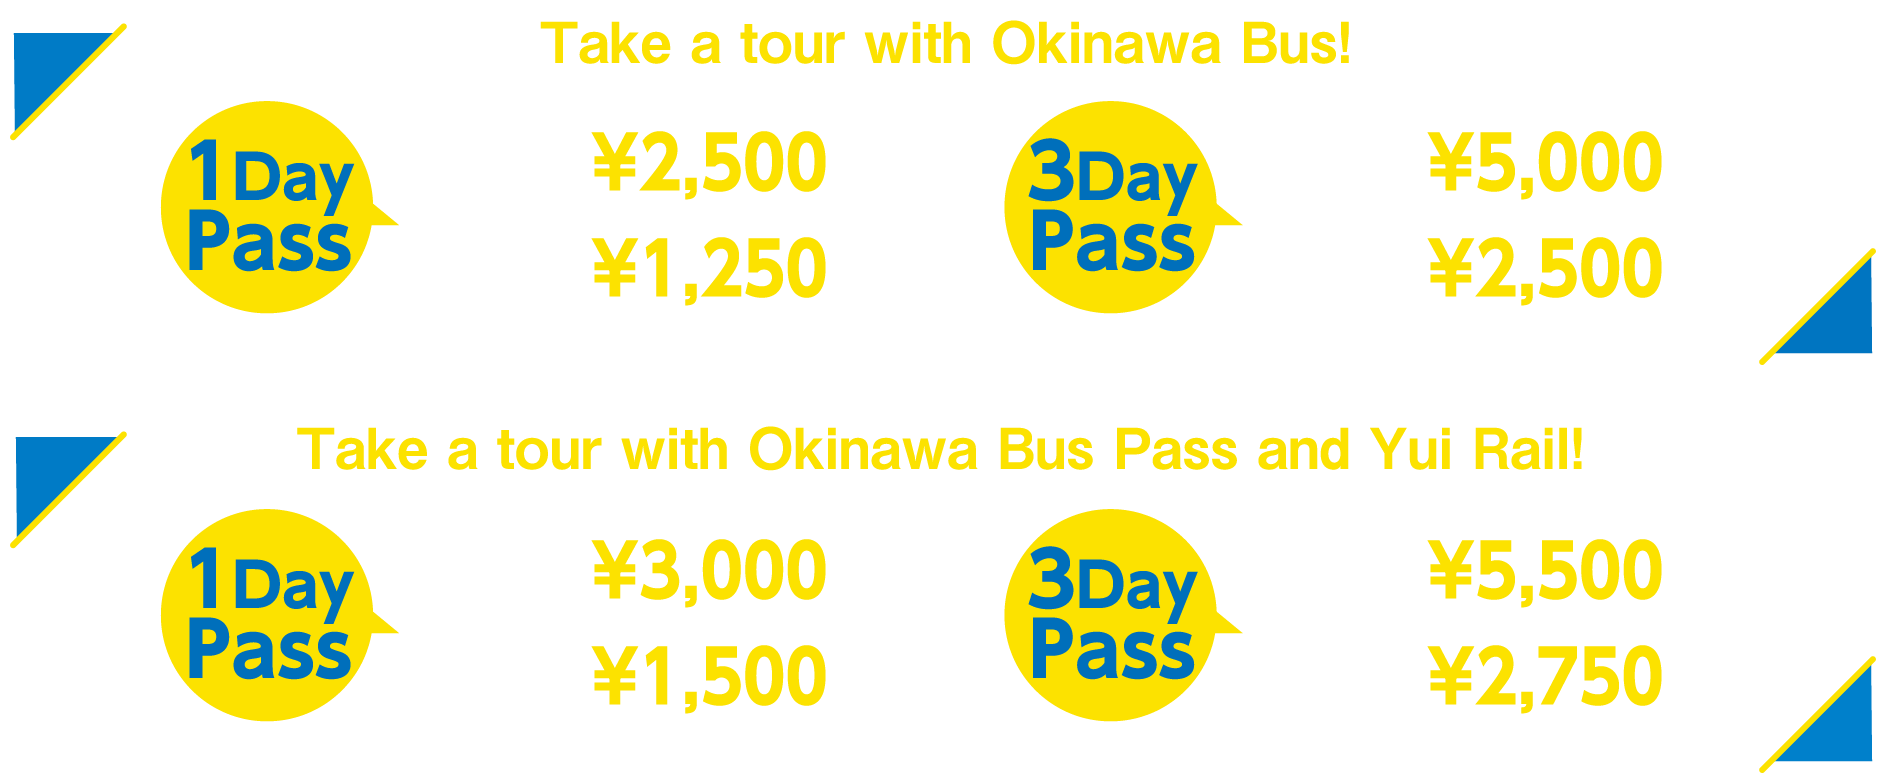 Take a tour with Okinawa Bus! / Take a tour with Okinawa Bus Pass and Yui Rail!